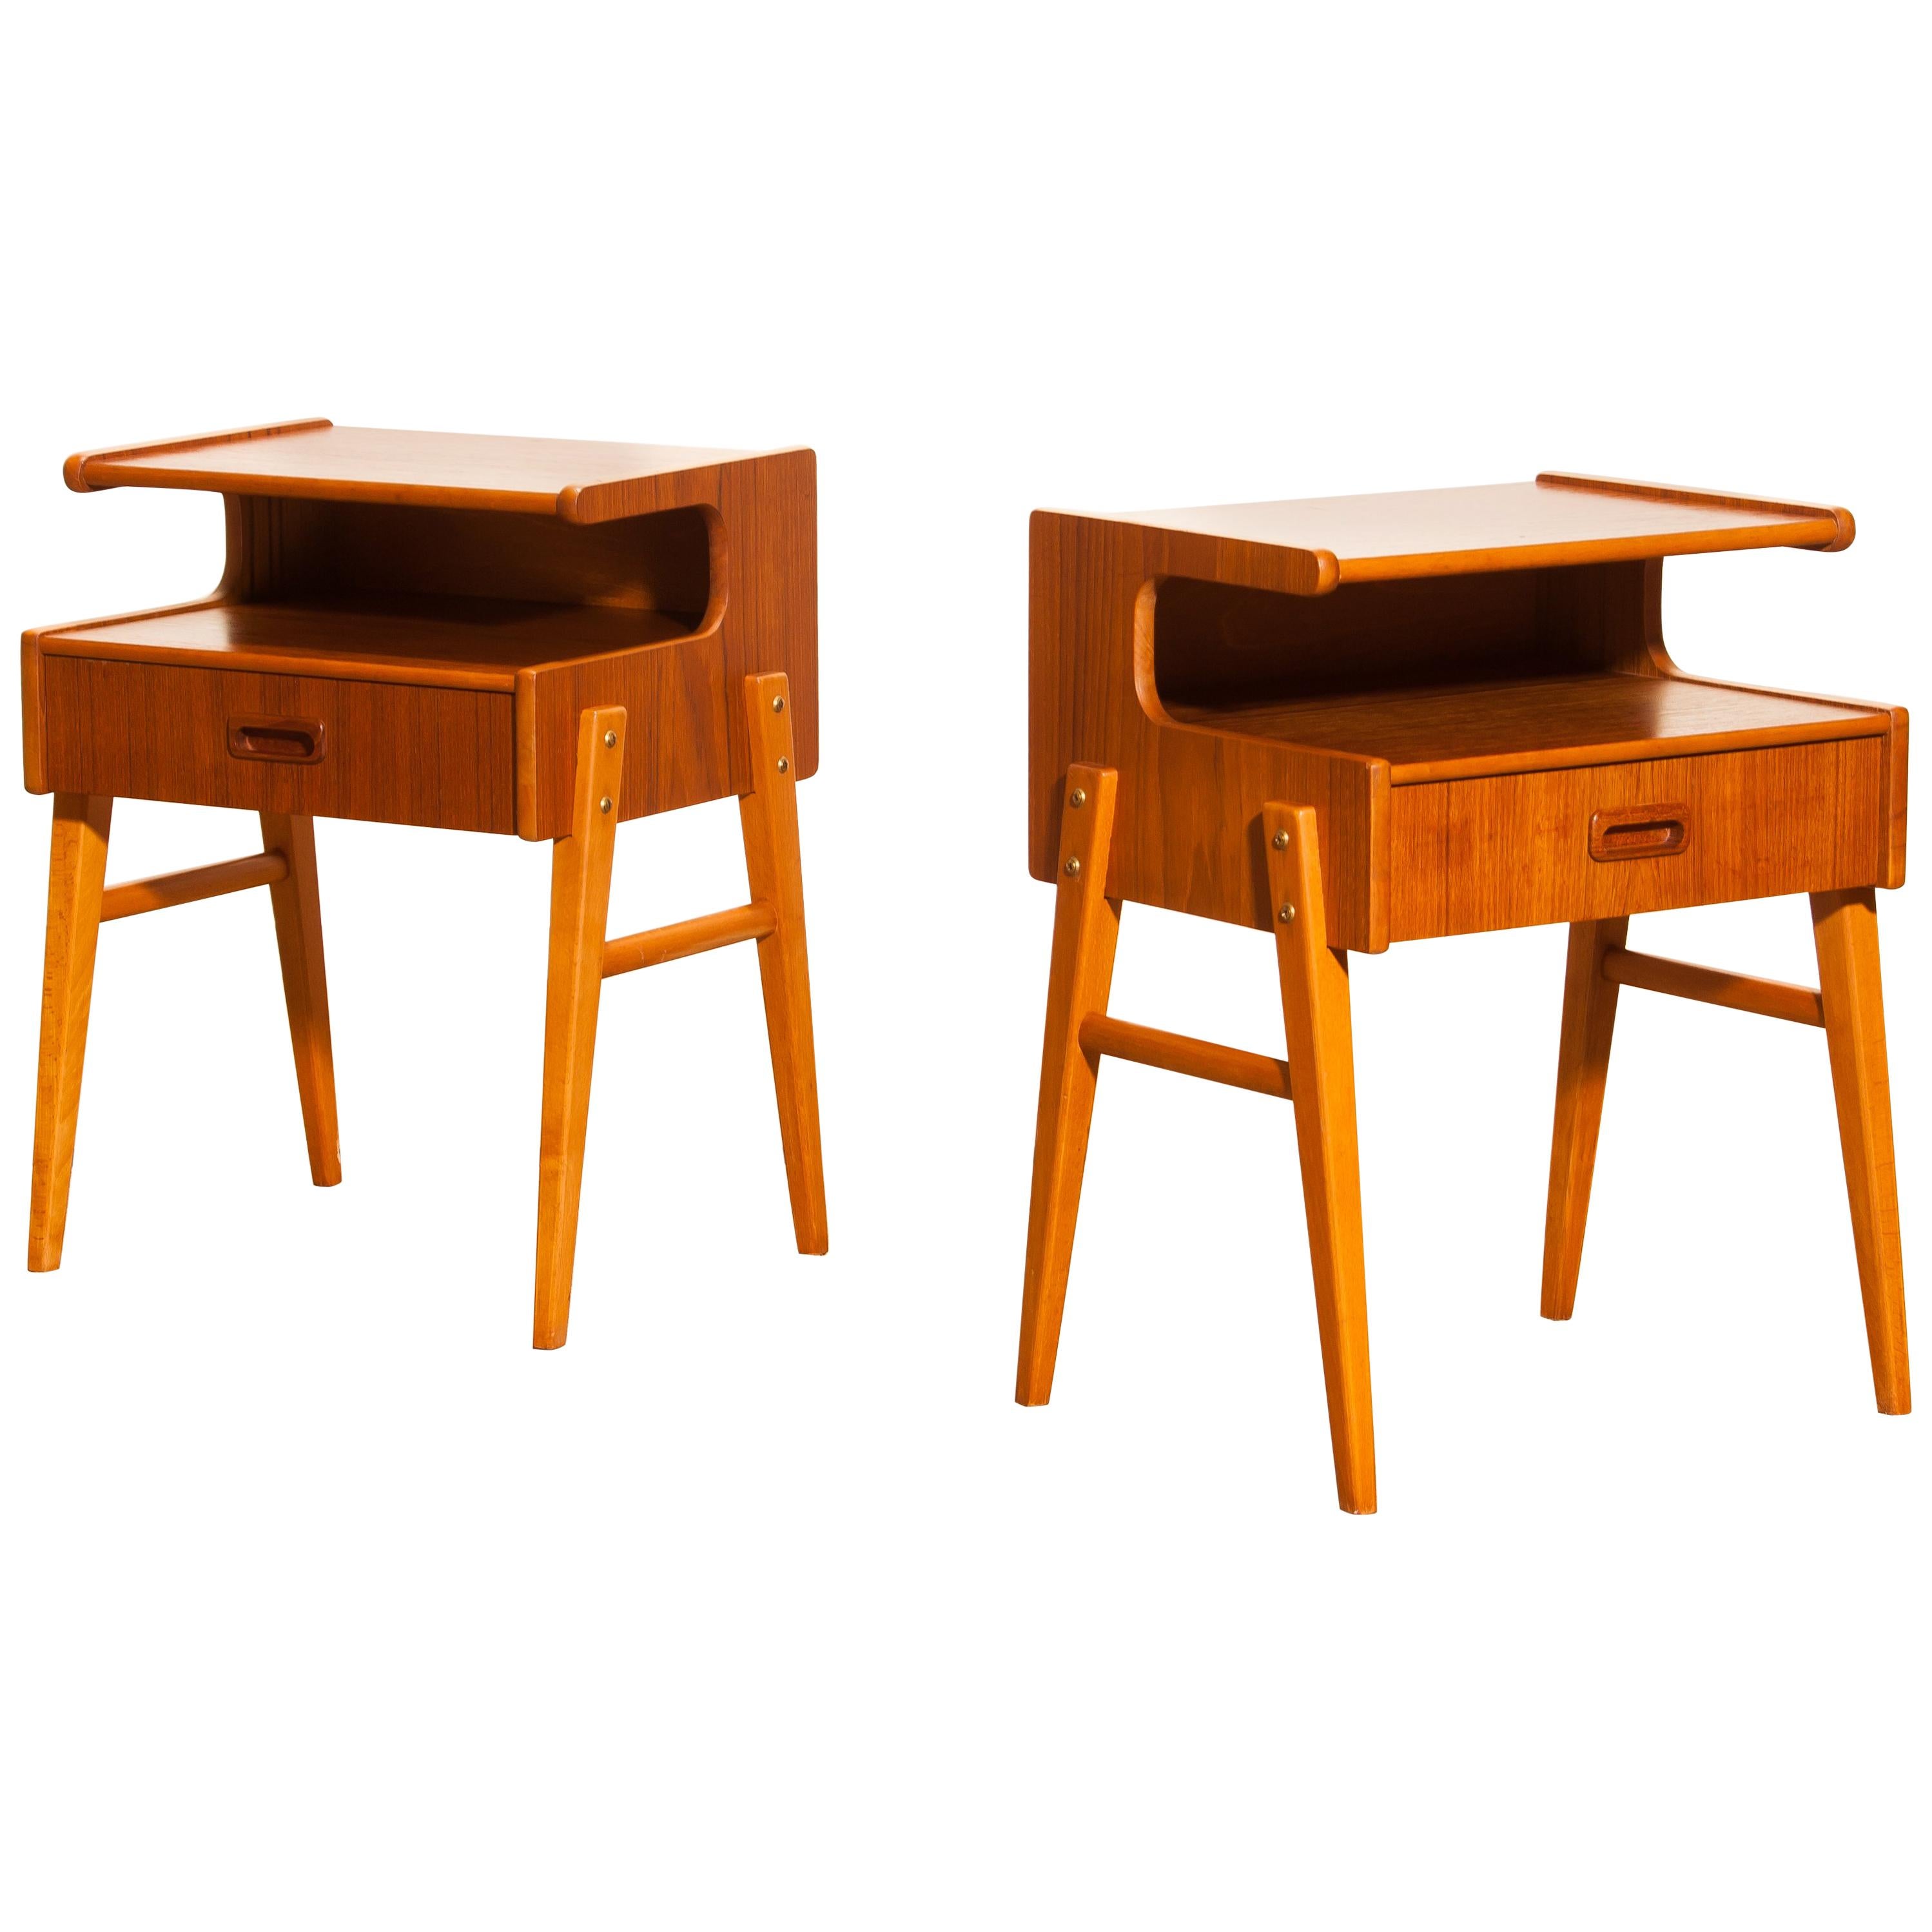 Mid-20th Century 1950s Pair of Teak 'Model C' Bedside Tables